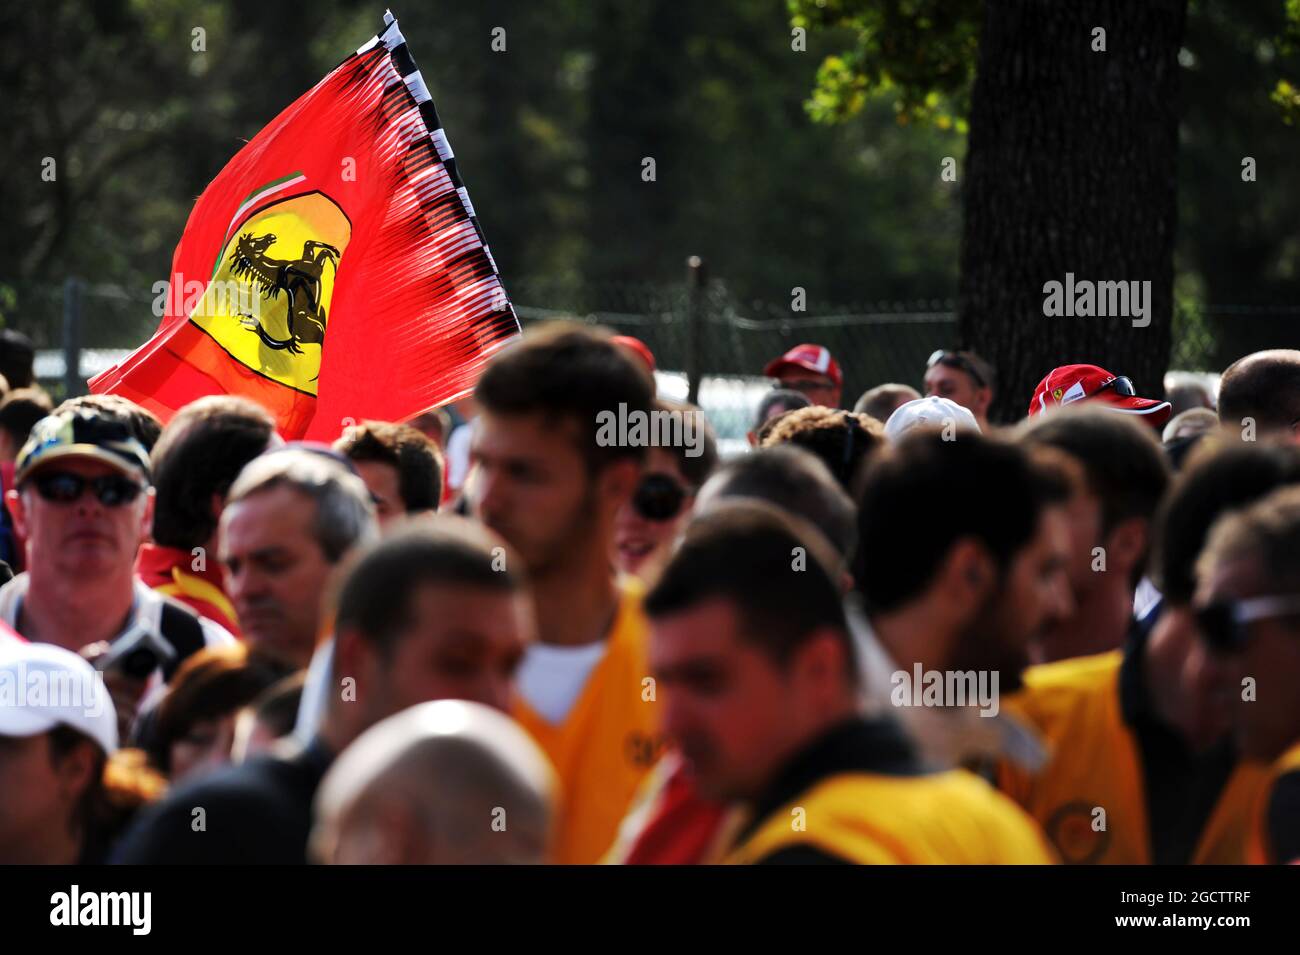 Fans. Italian Grand Prix, Sunday 7th September 2014. Monza Italy. Stock Photo